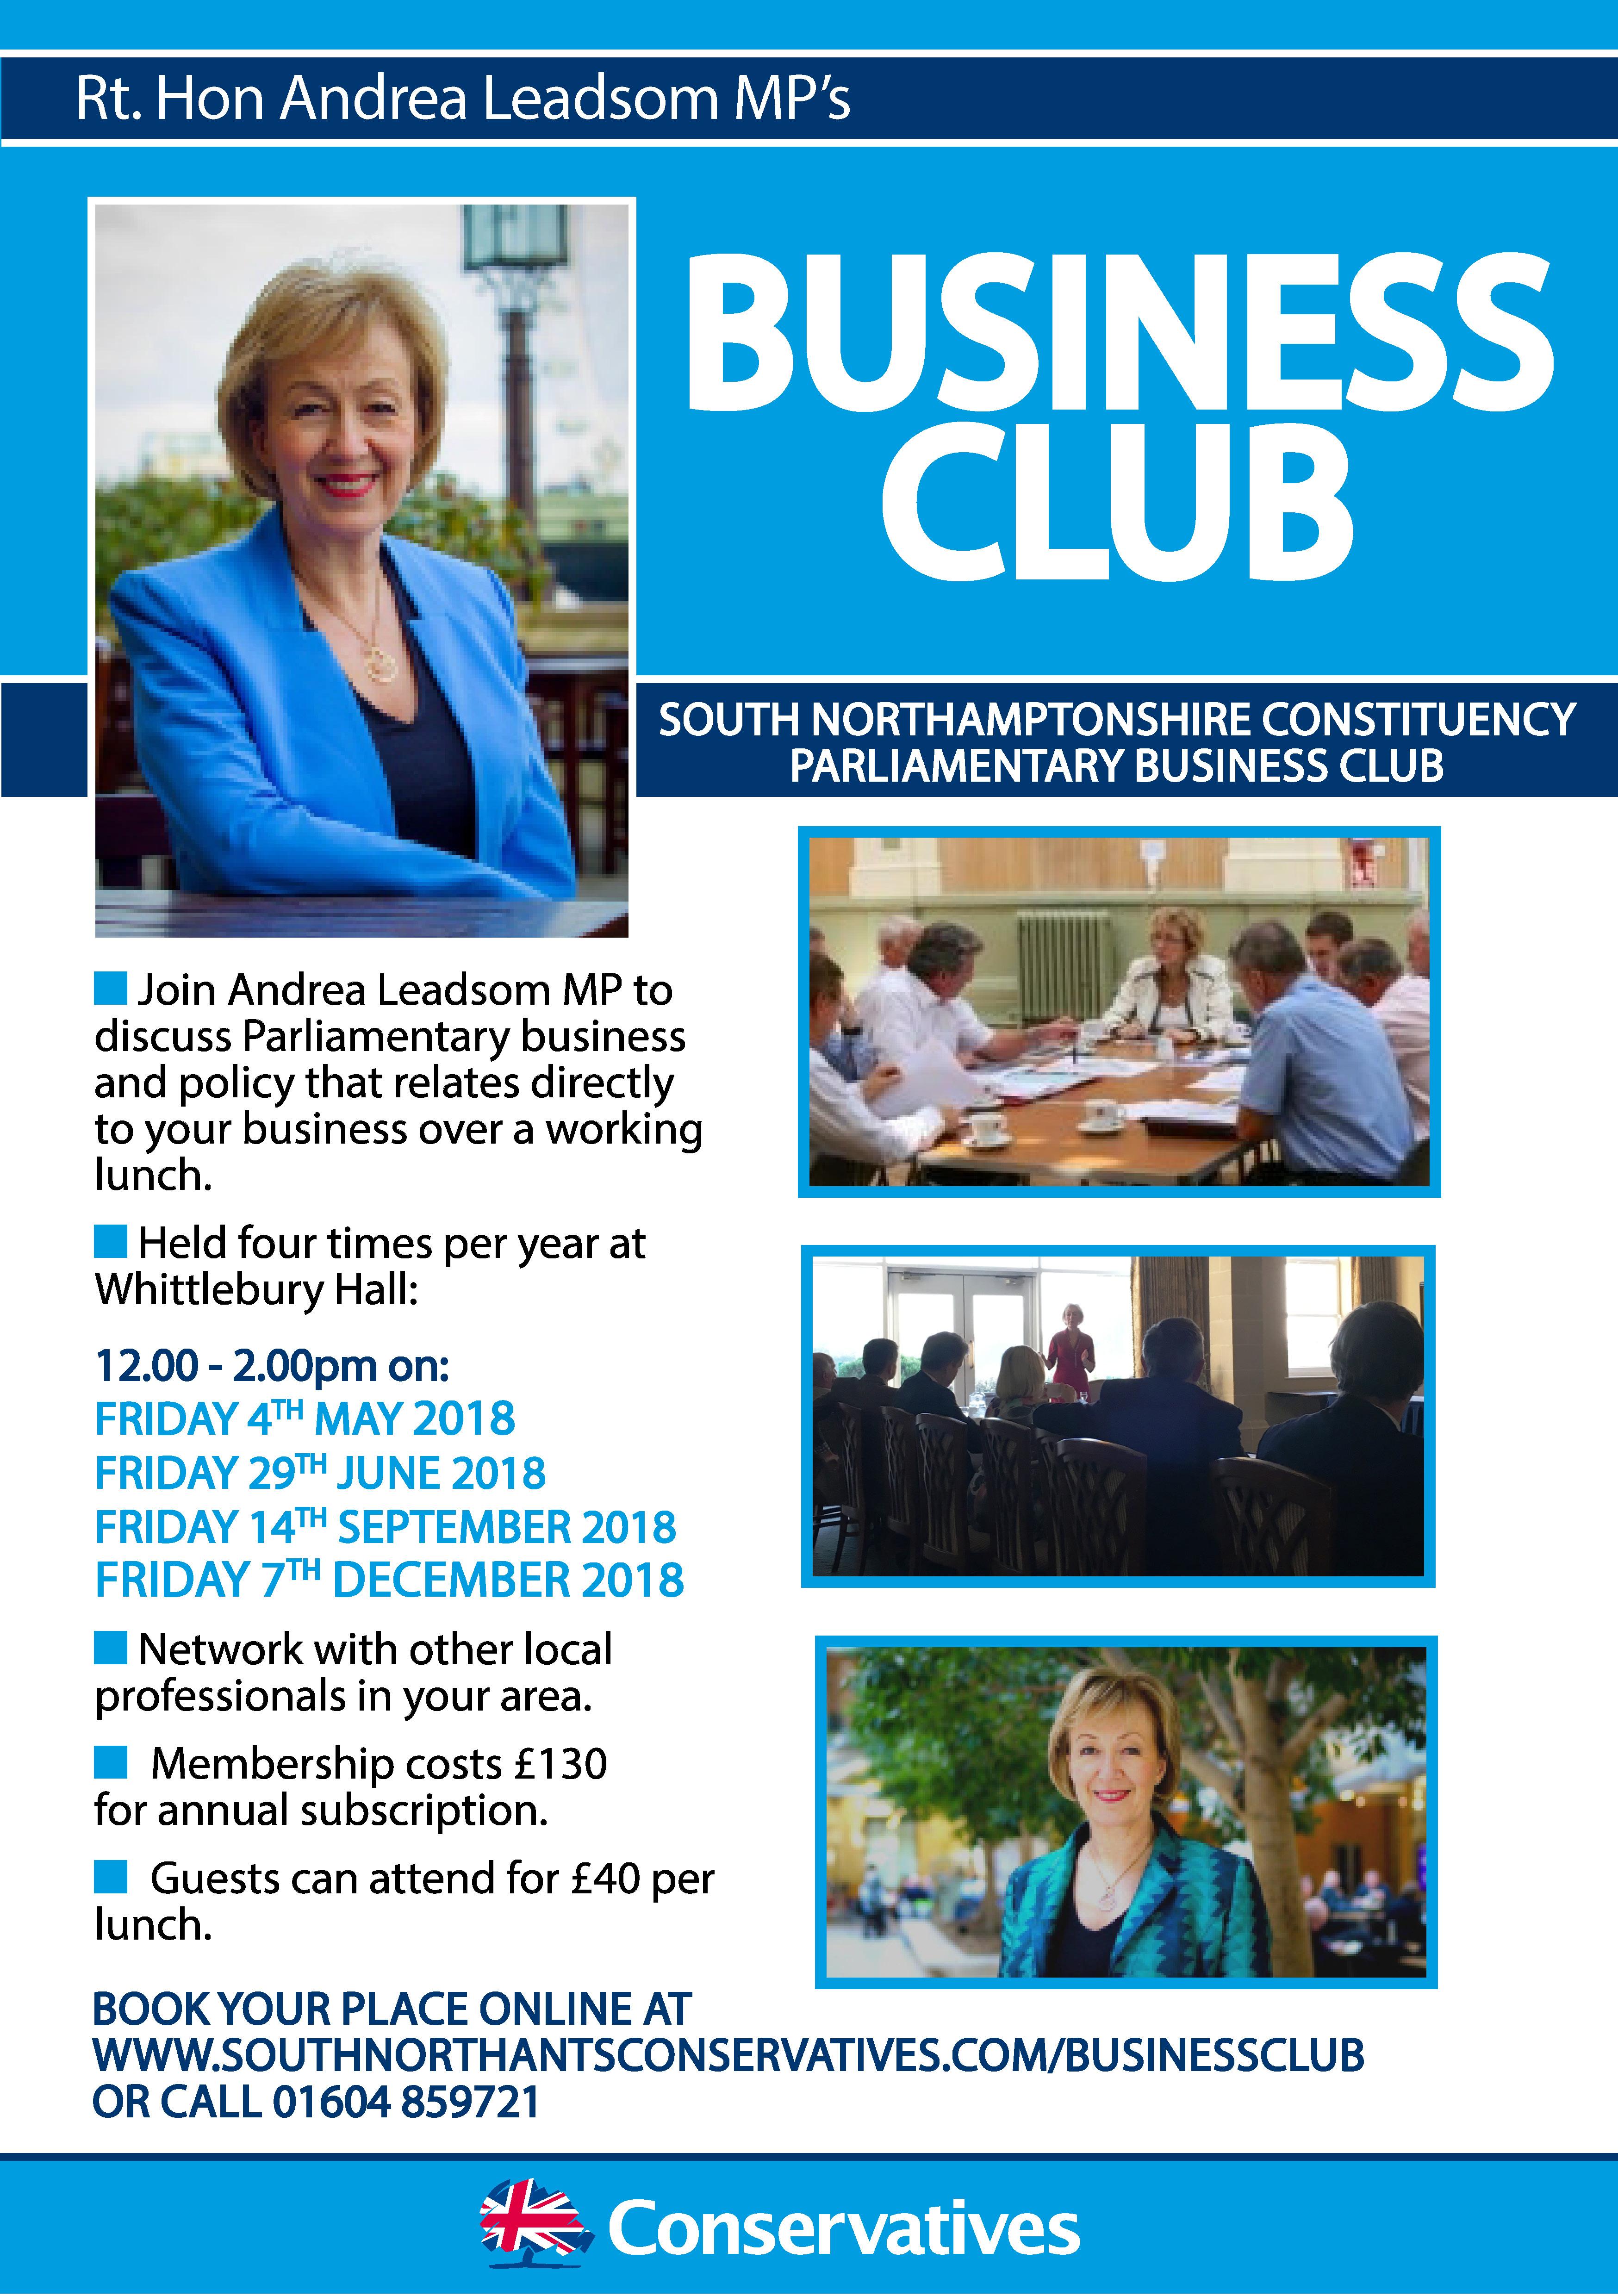 Andrea Leadom MP's Business Club December 2018